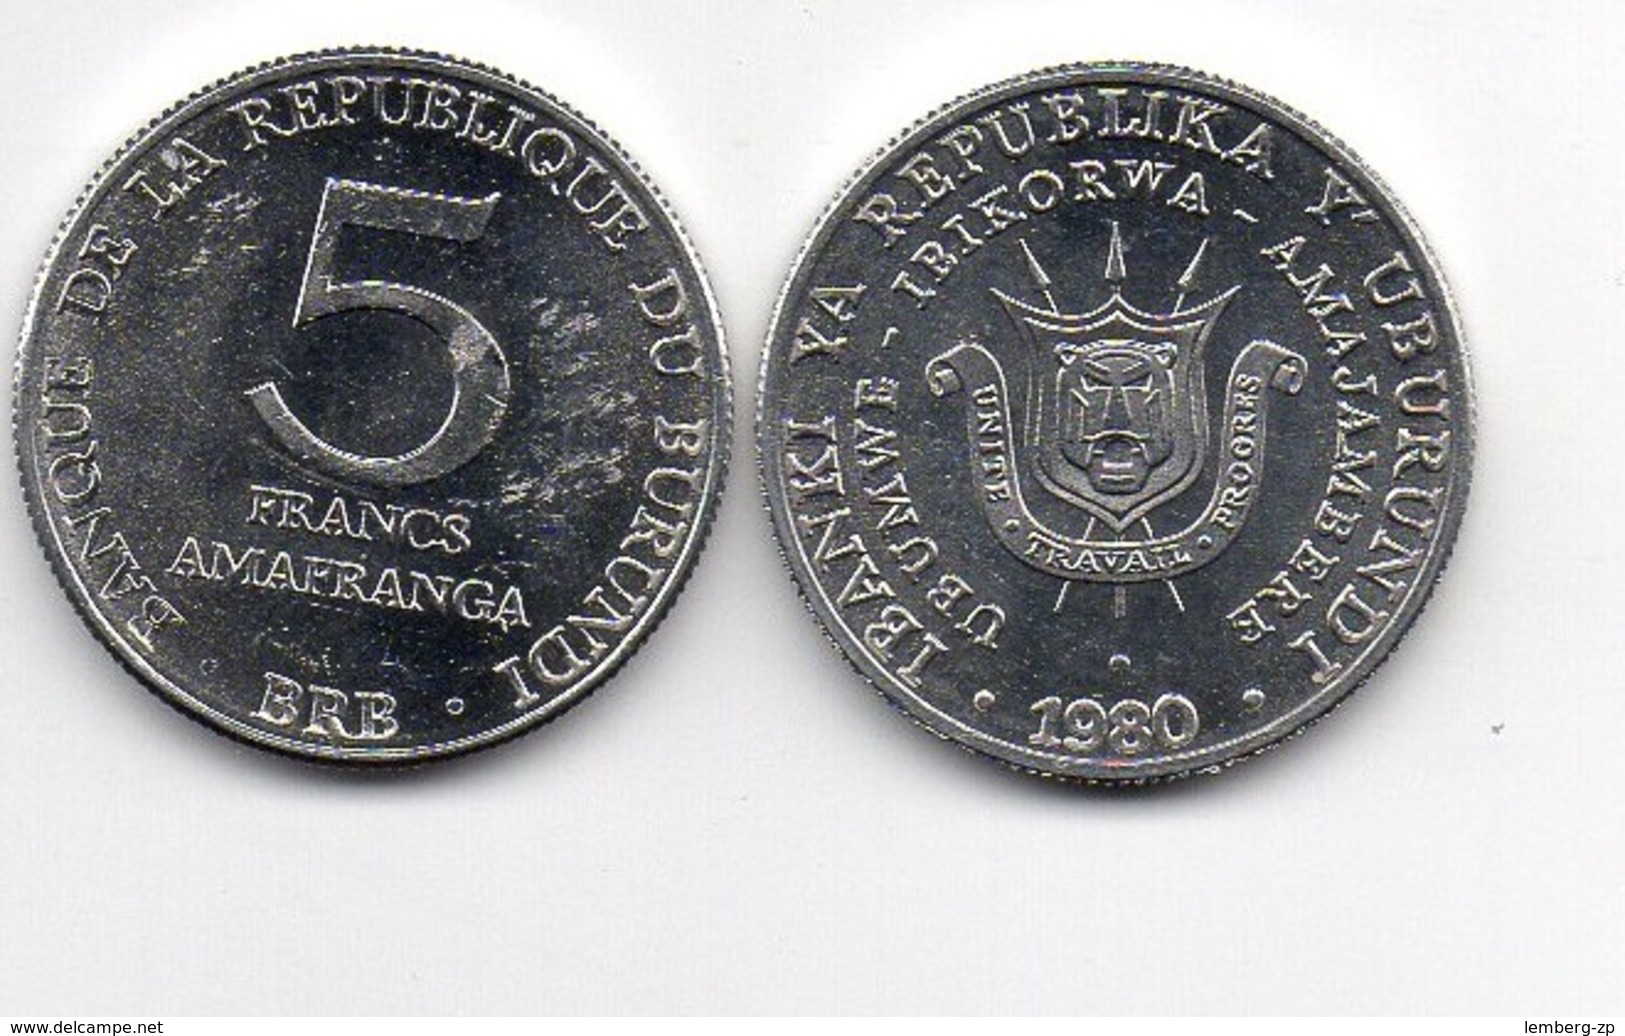 Burundi - 5 Francs 1980 VF++ Lemberg-Zp - Burundi